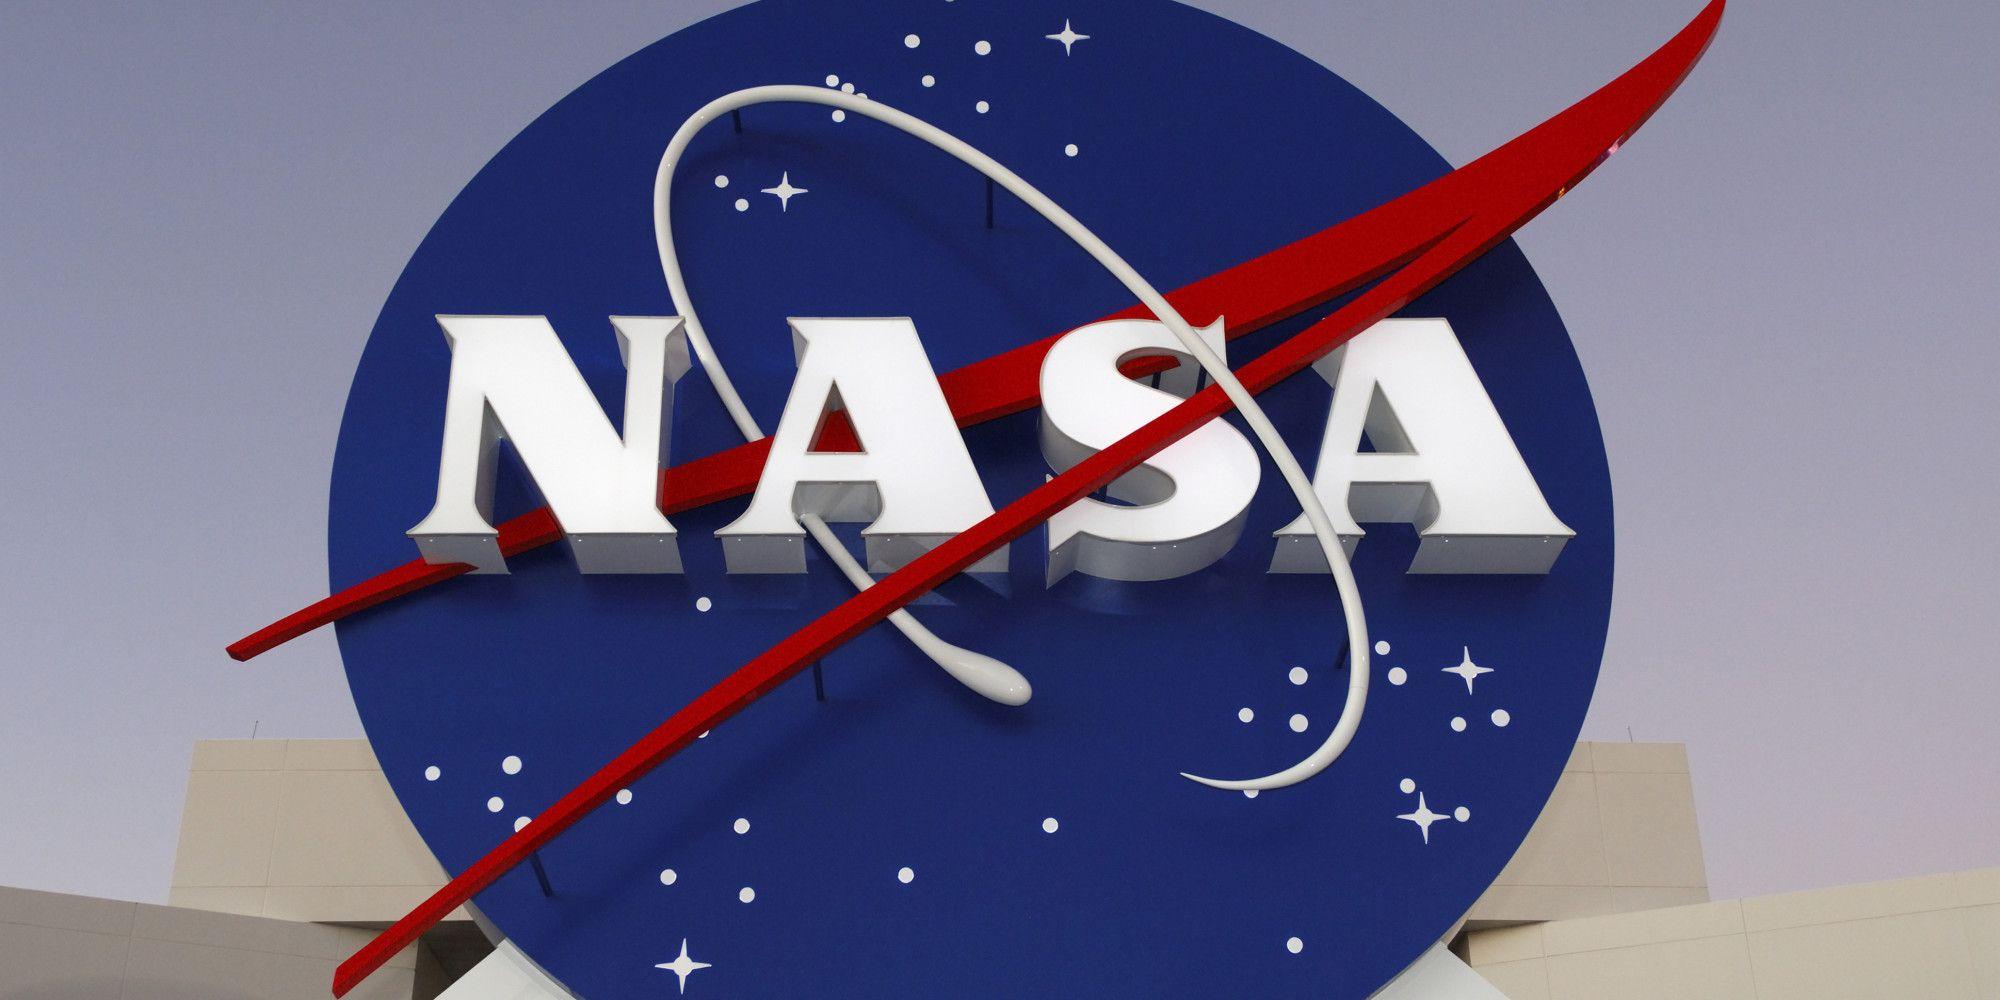 Custom NASA Logo - Information about Old Nasa Logo